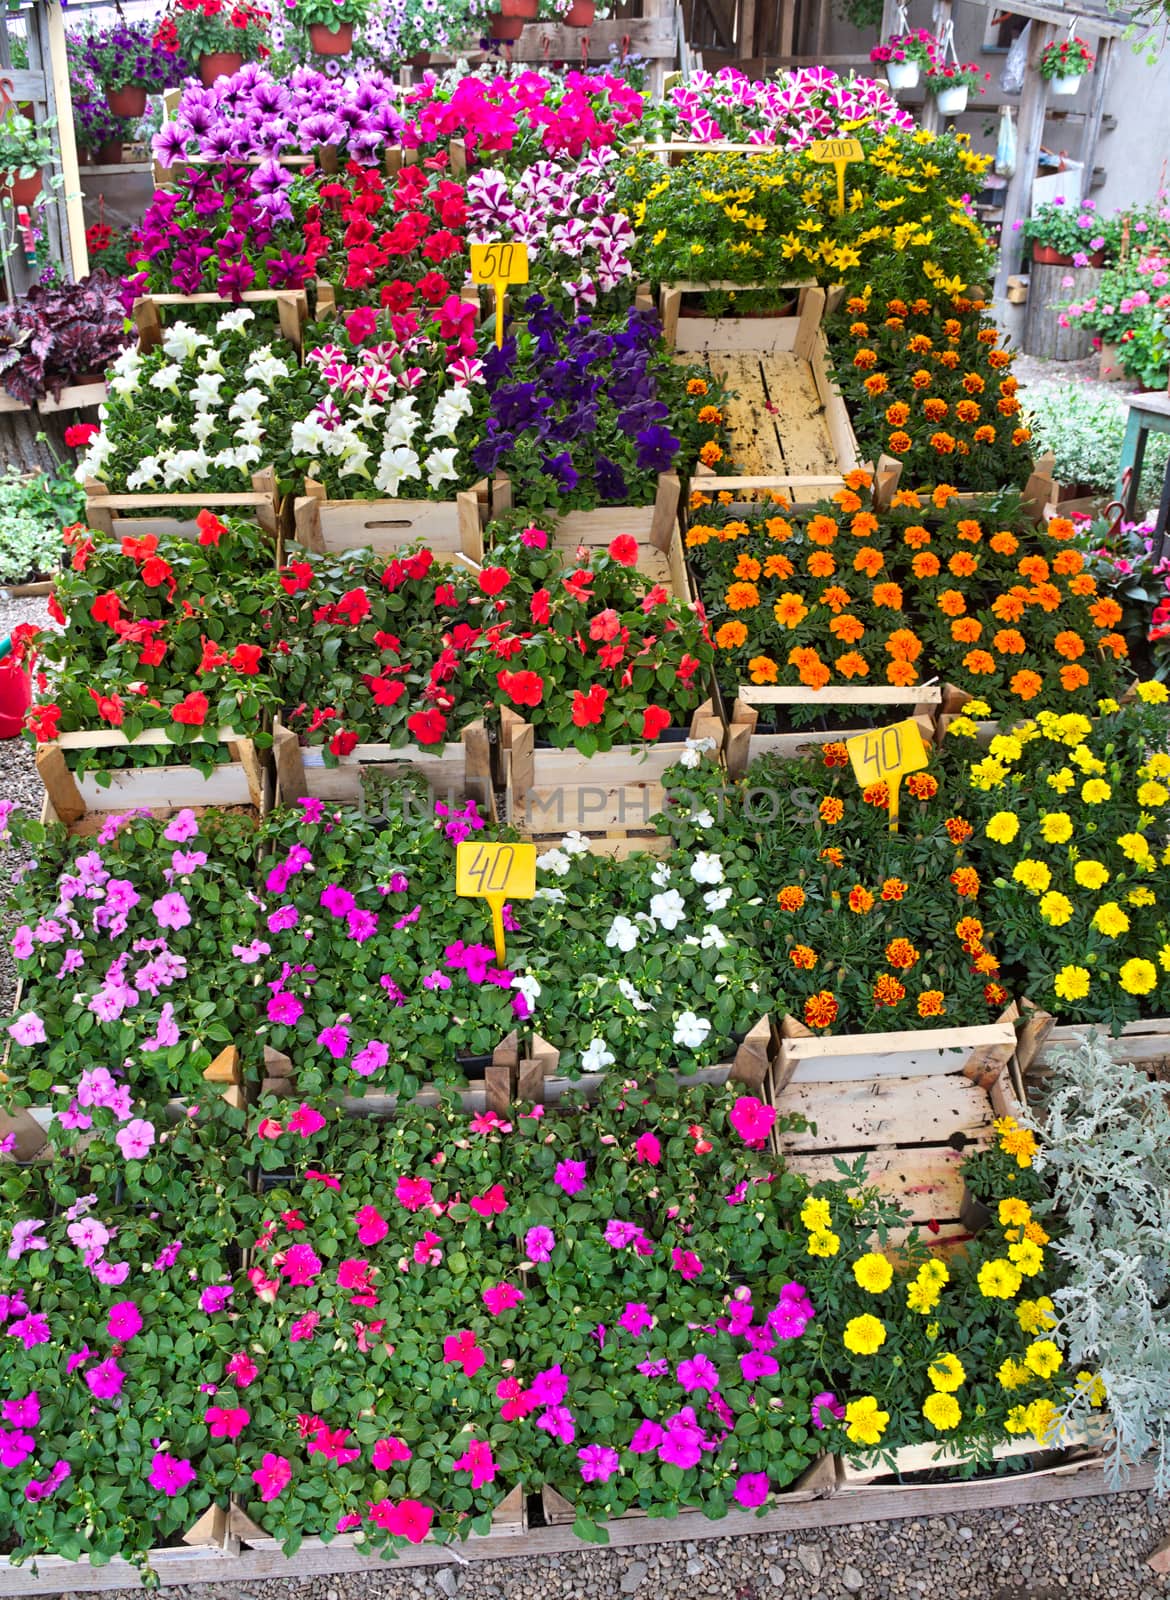 Abundance of blooming plants on display in flower shop by sheriffkule